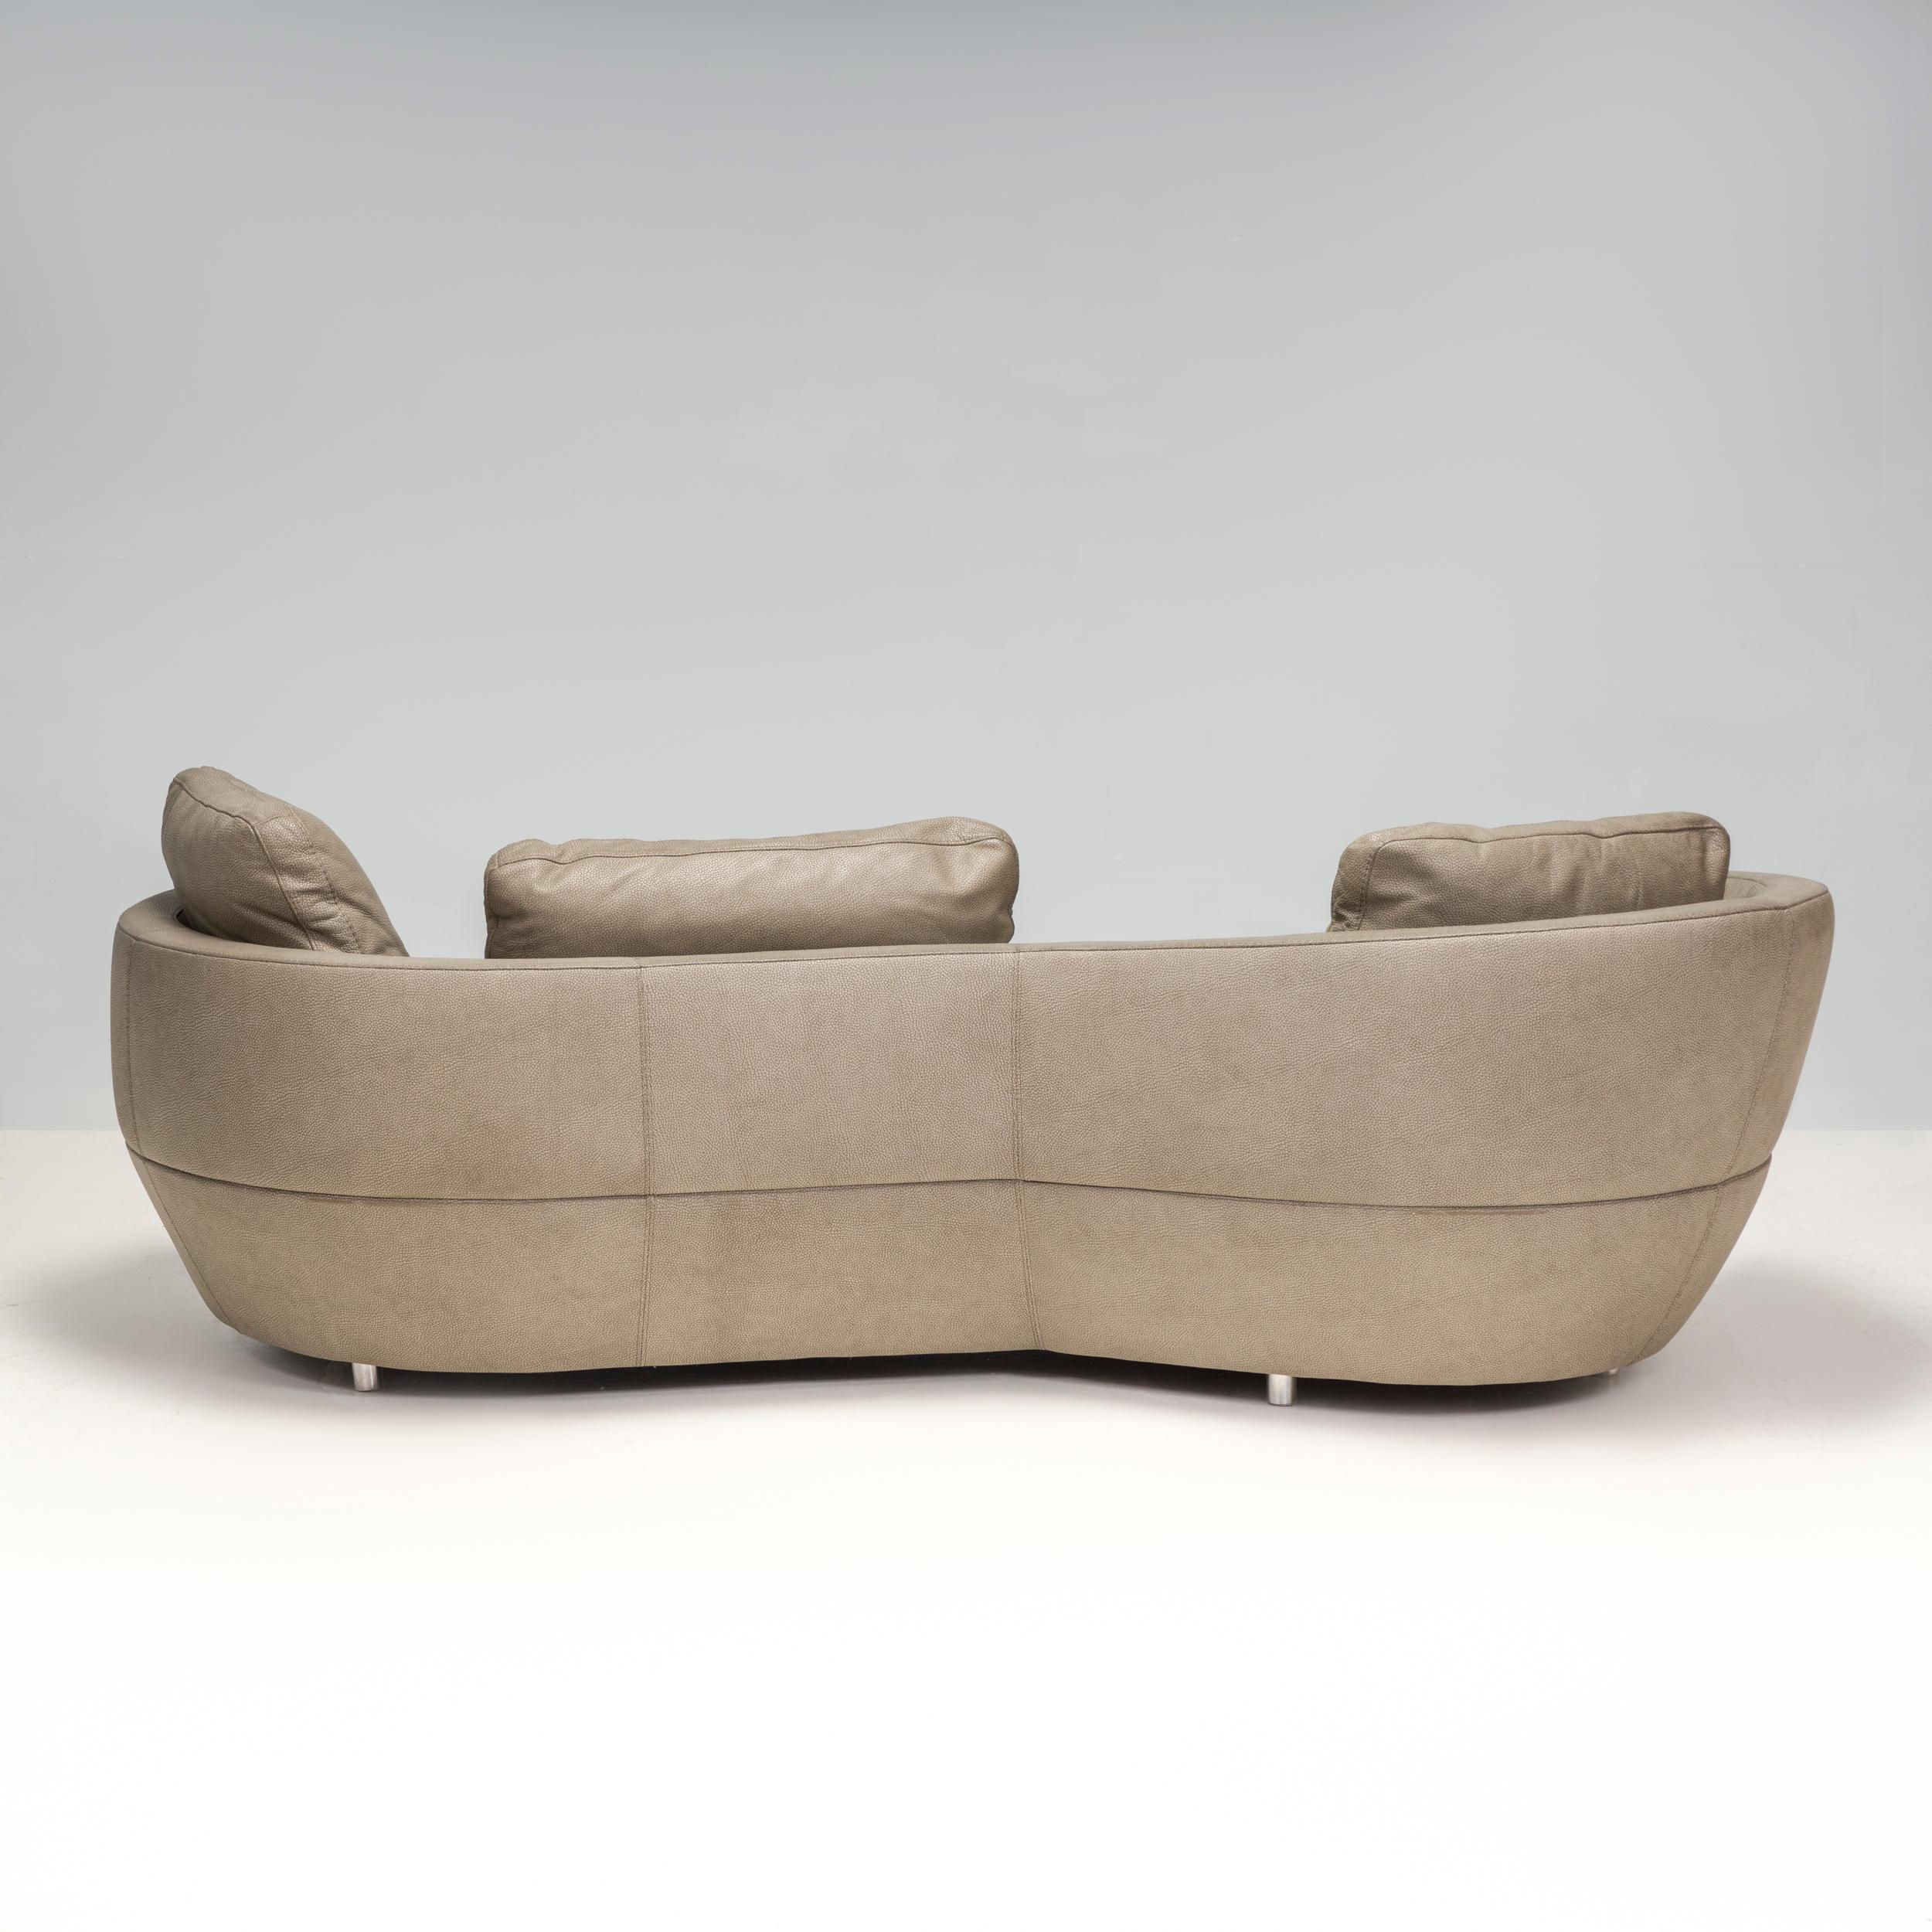 Modern Roche Bobois by Gabriele Assmann & Alfred Kleene Leather Digital Curved Sofa For Sale